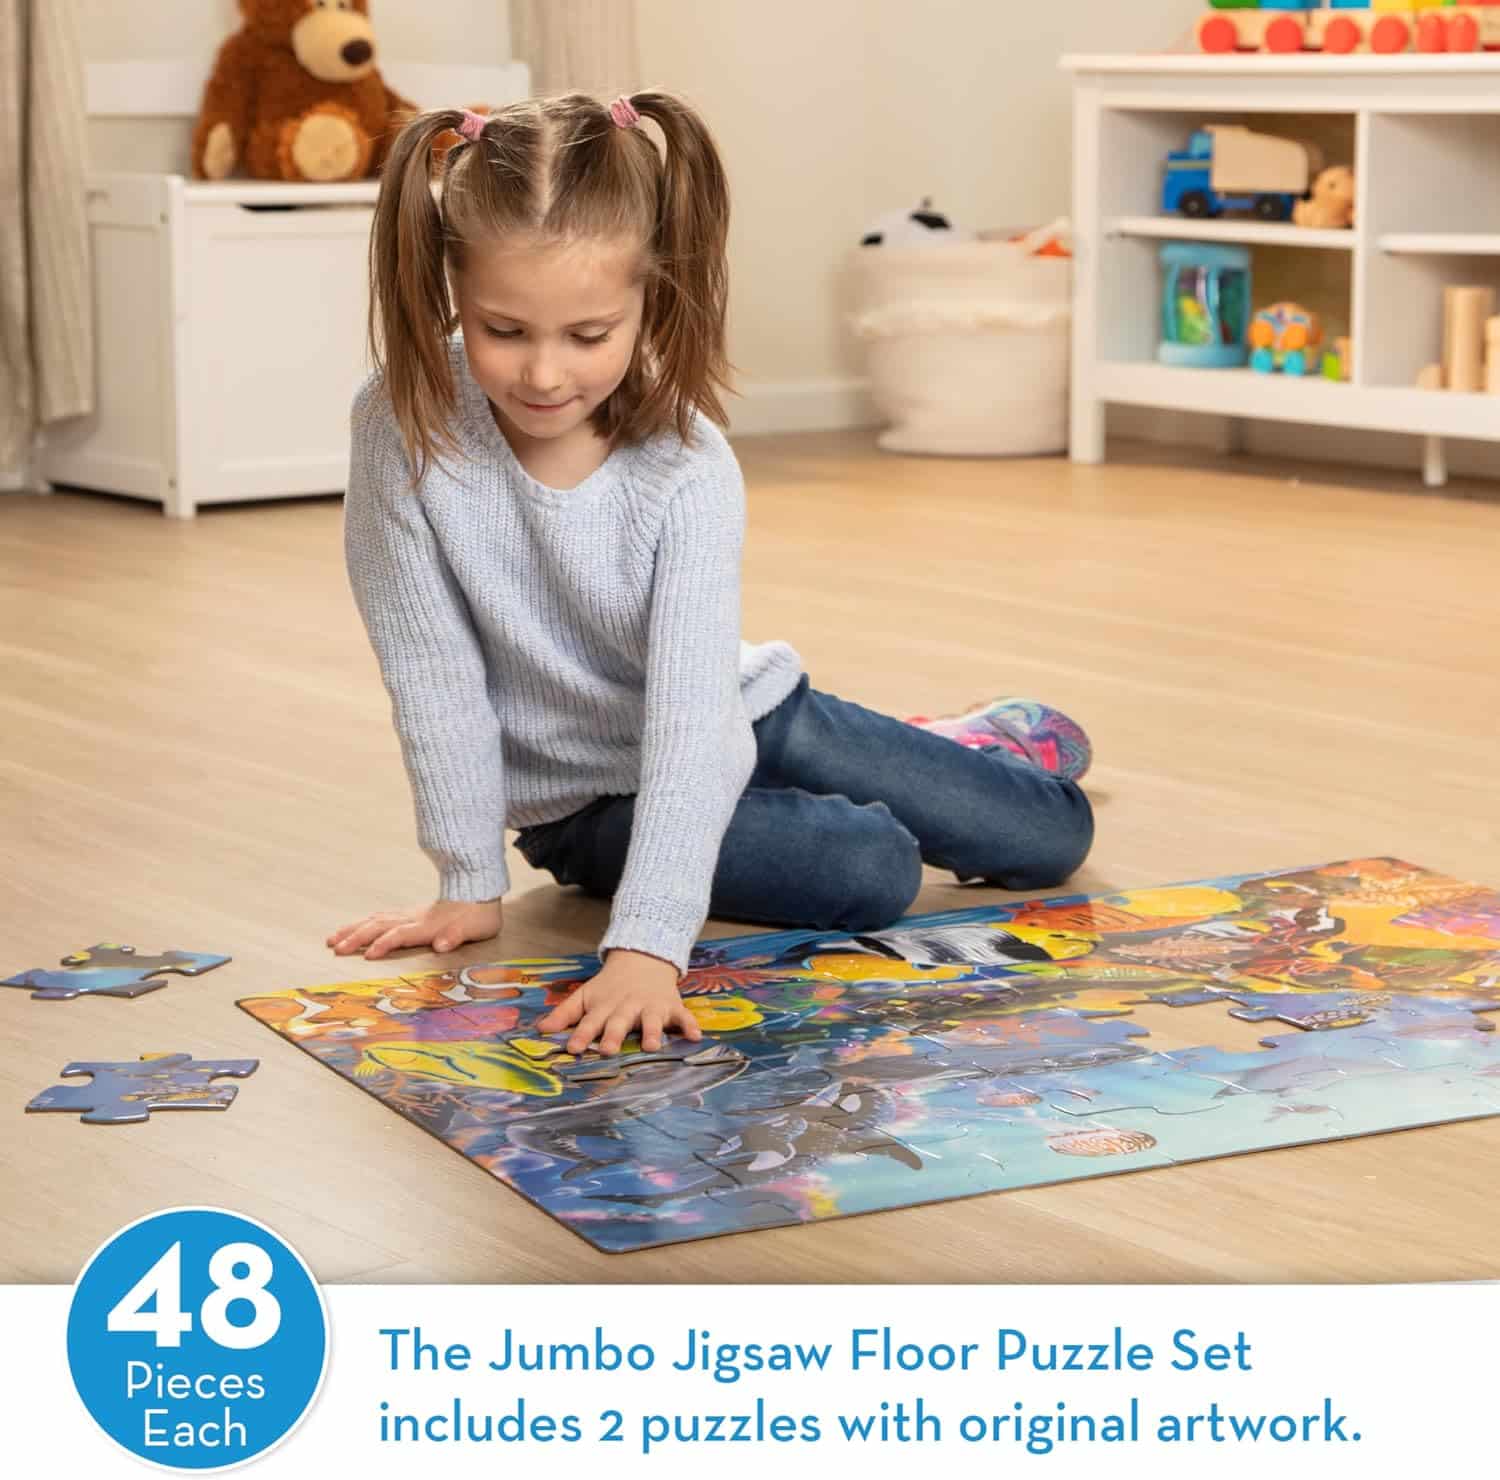 Melissa & Doug Jumbo Jigsaw Floor Puzzle Set - A Fun and Educational Review